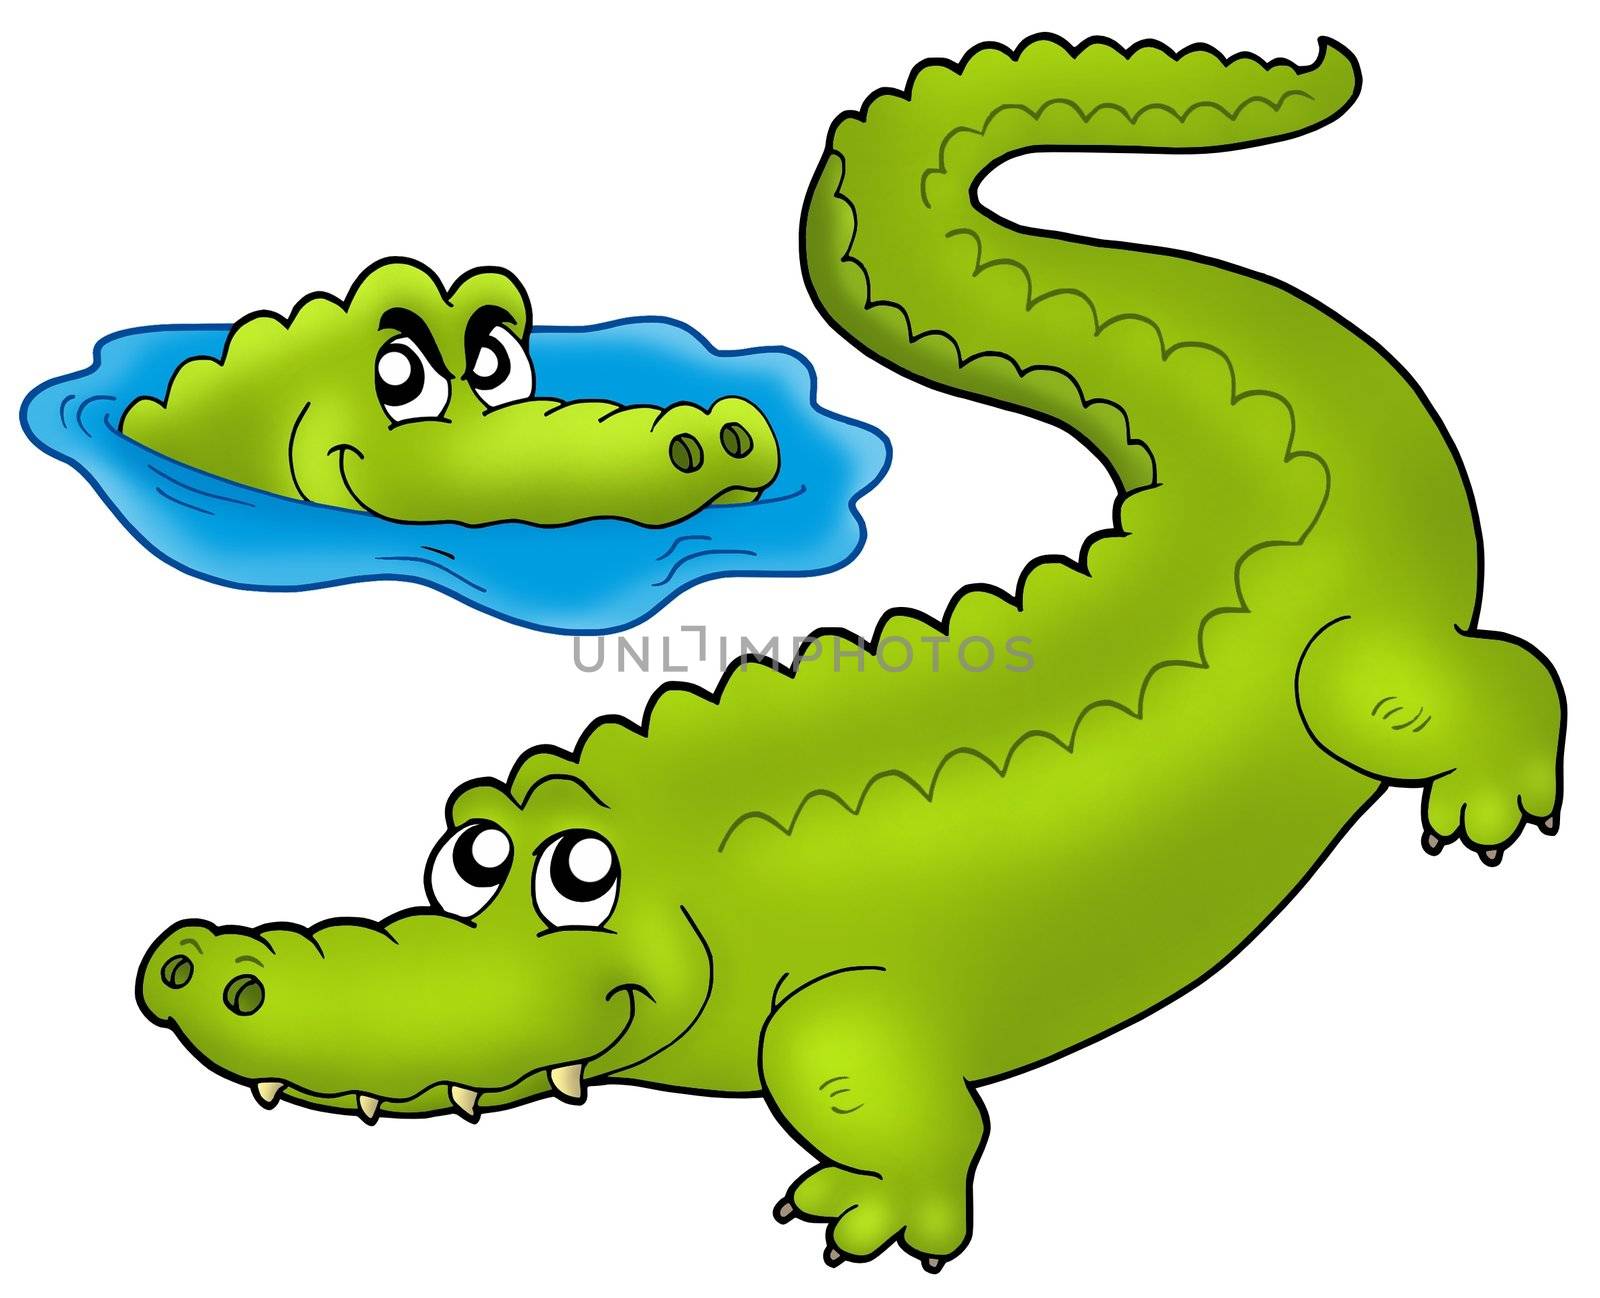 Pair of cartoon crocodiles - color illustration.